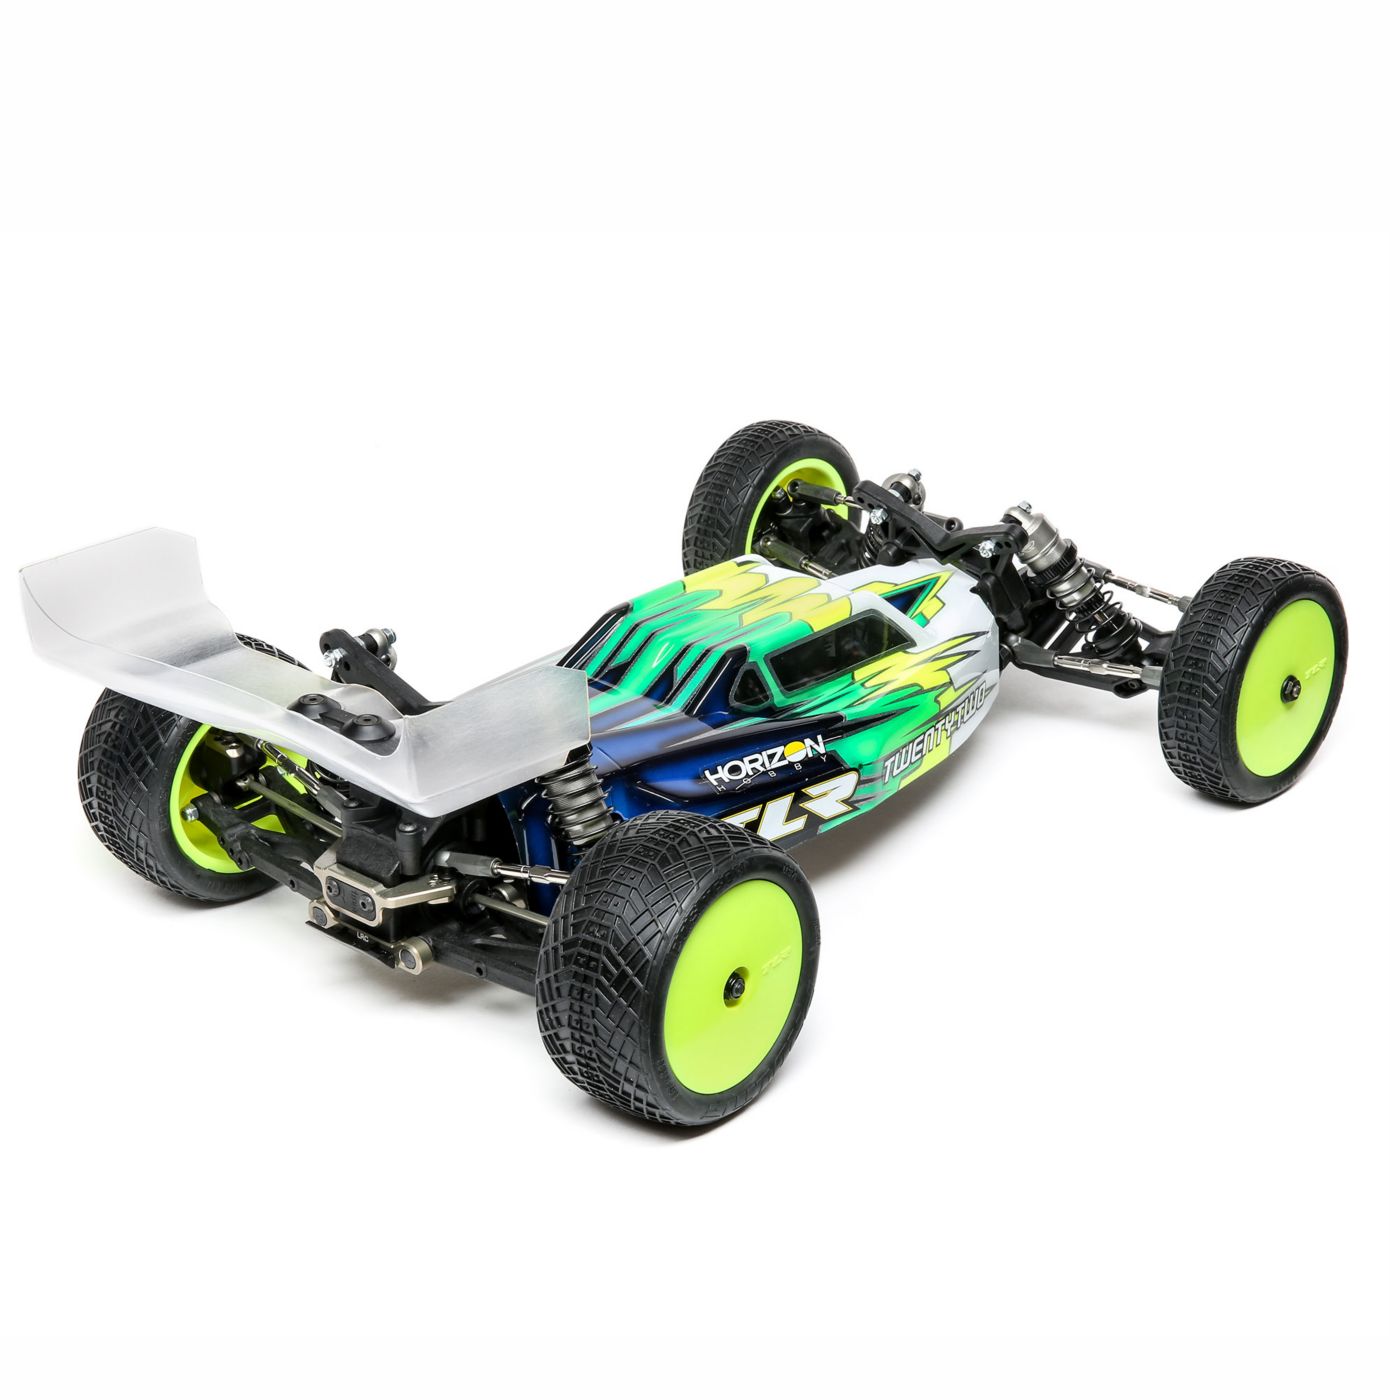 Team Losi Racing 22 4 Spec Racer 2WD - Rear